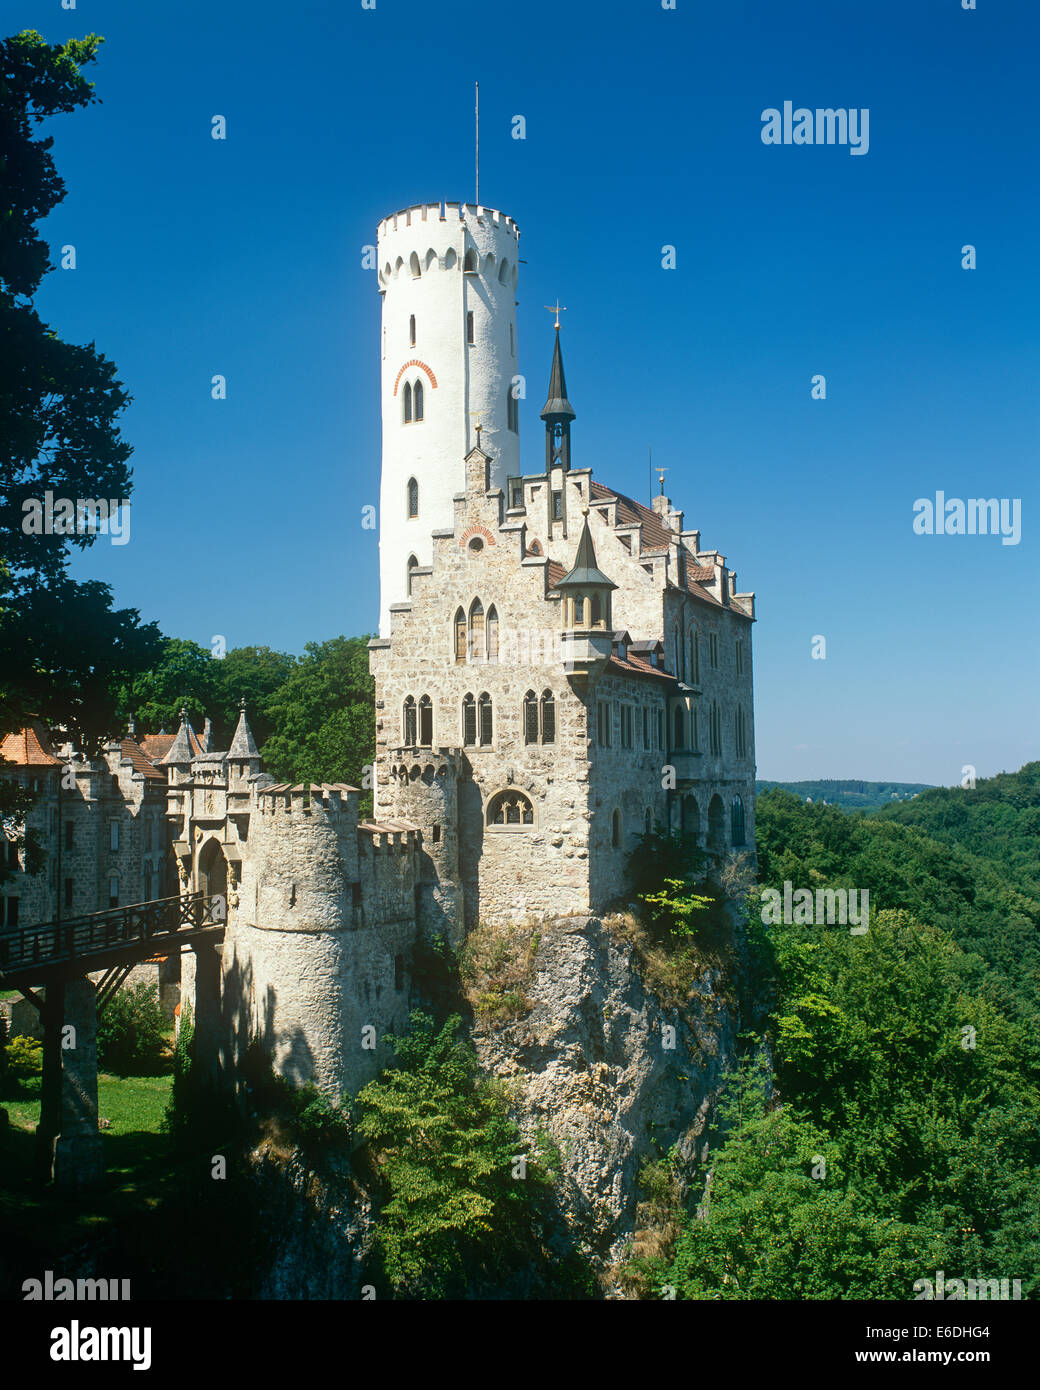 The Lichenstein castle in echaz valley Germany Stock Photo